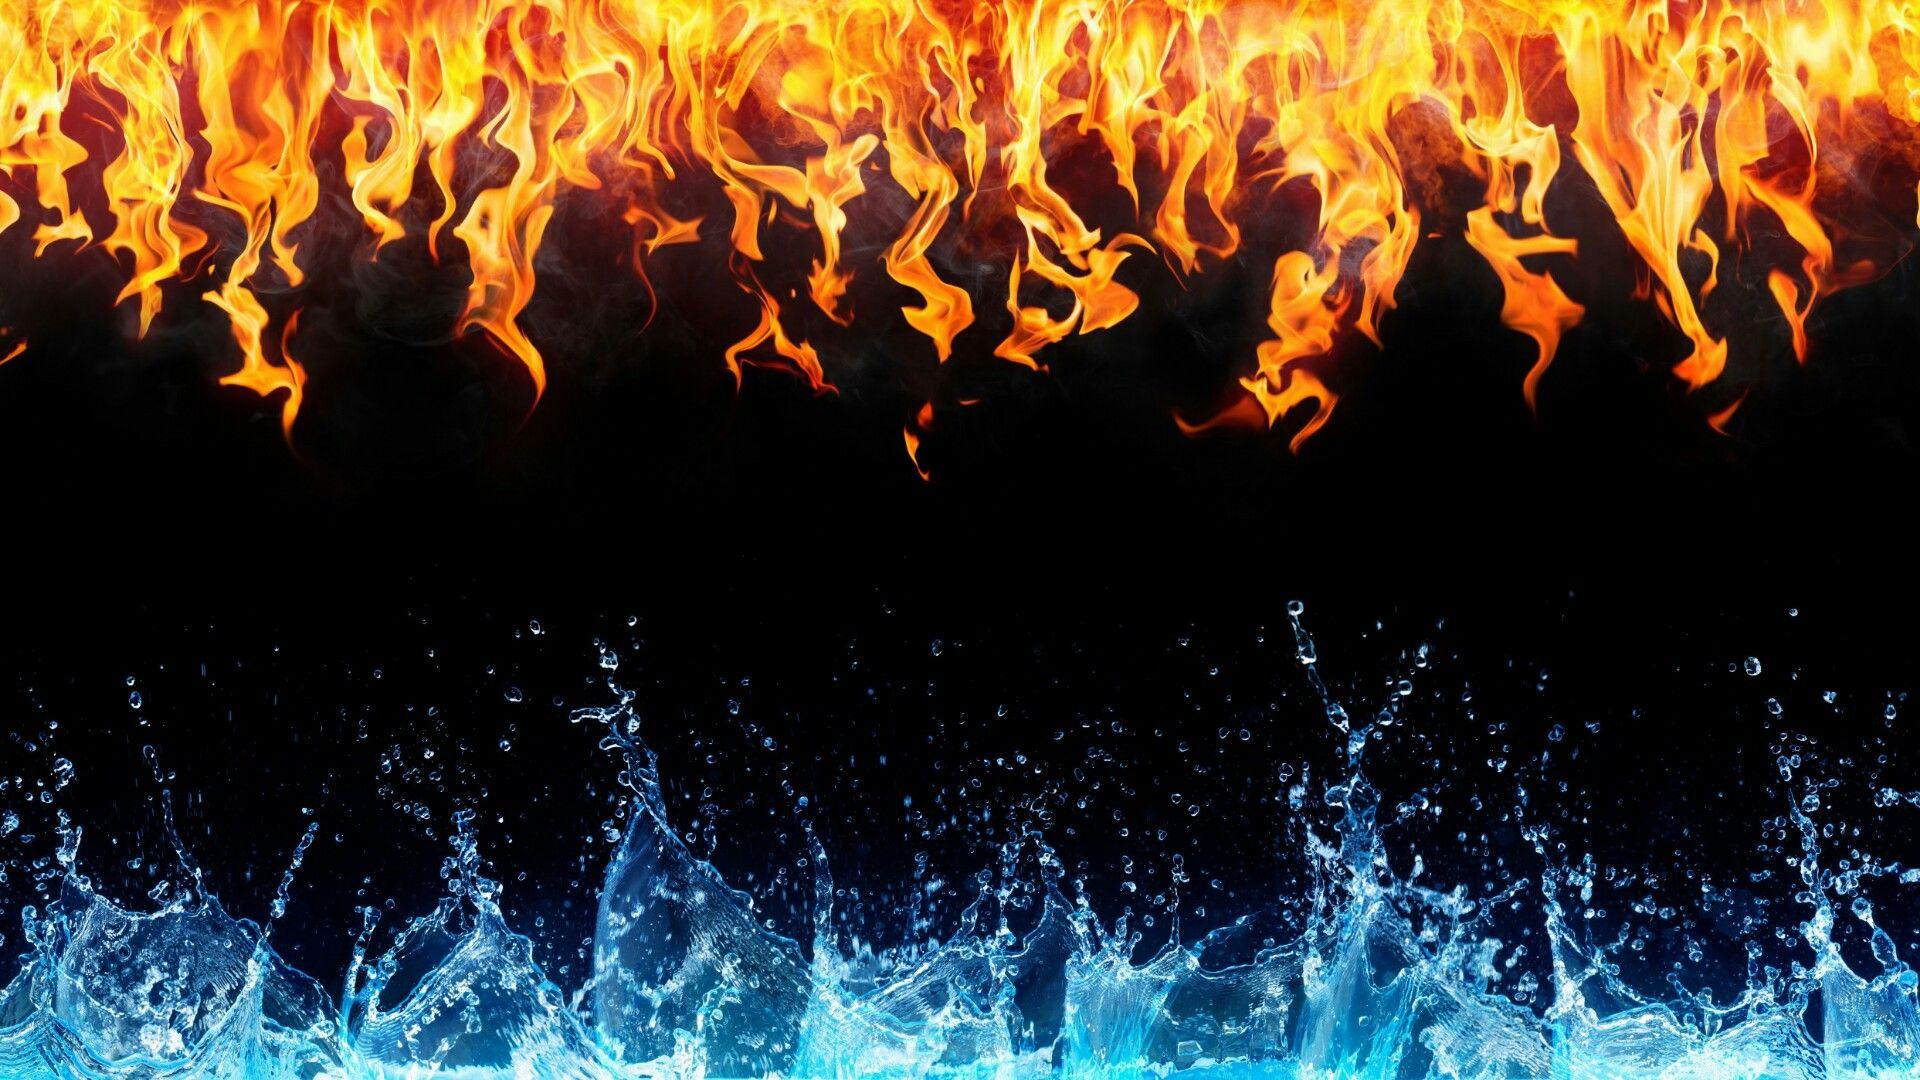 Water & Fire HD Wallpaper. Wallpaper Studio 10. Tens of thousands